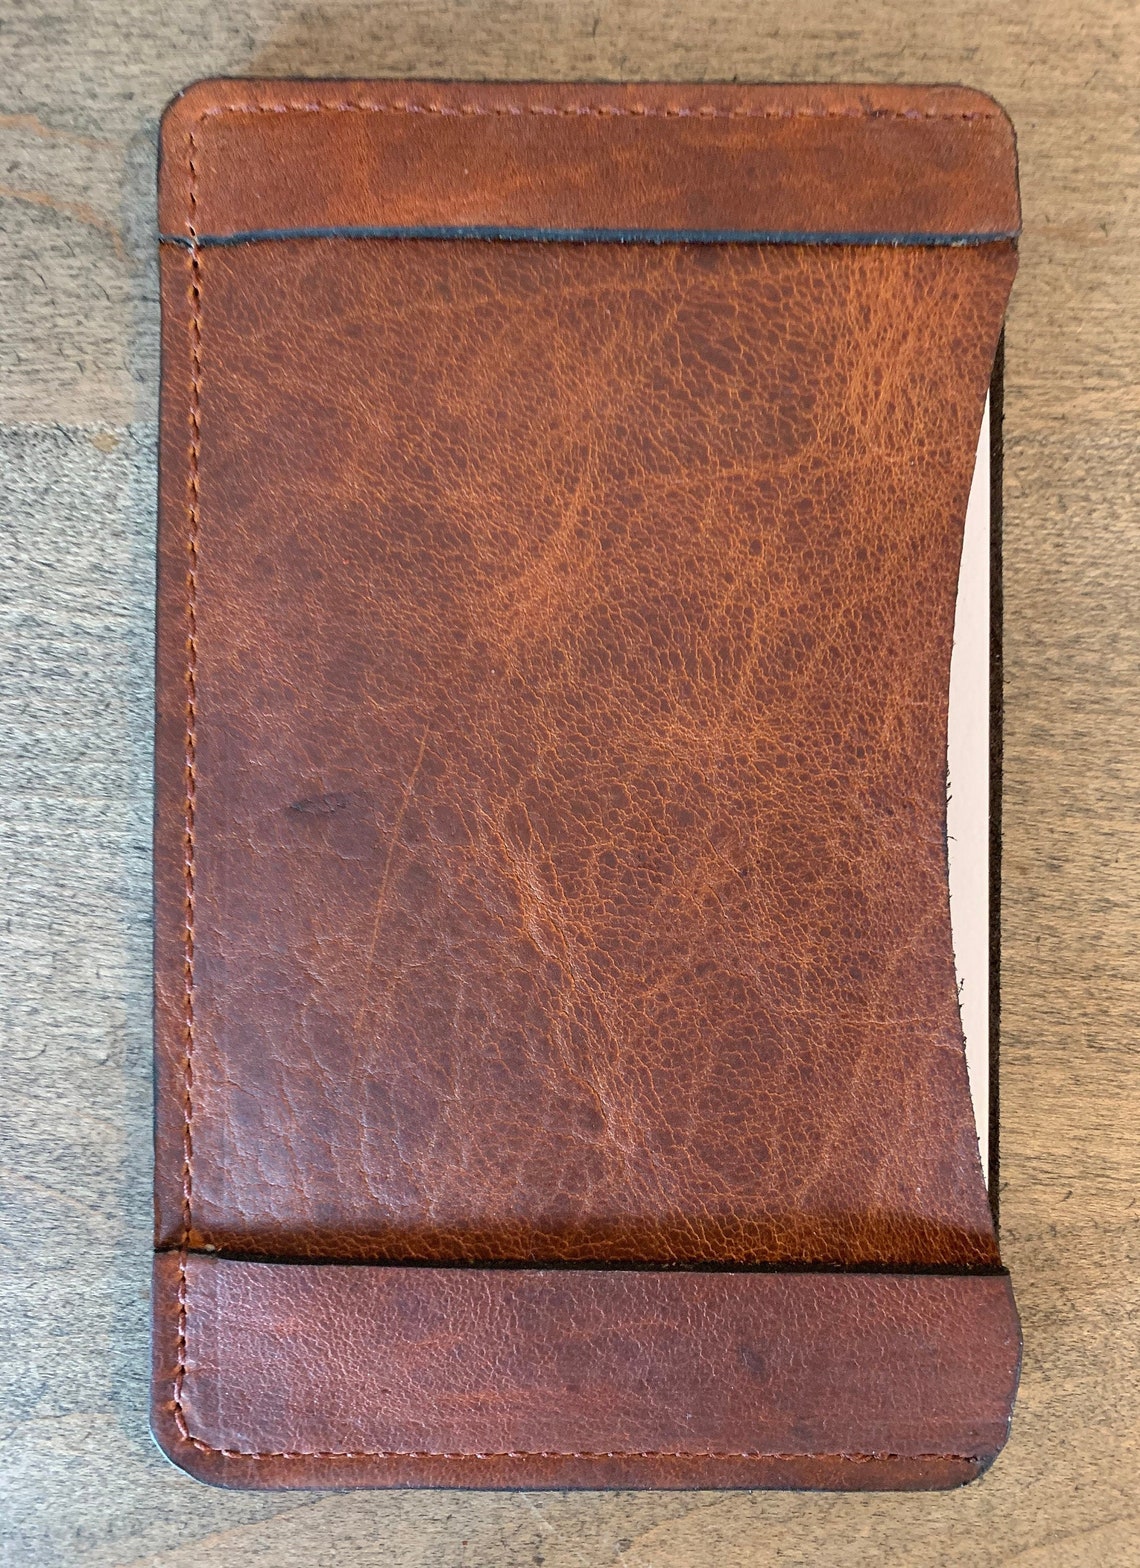 Leather Index Card Holder 3 x 5 | Etsy